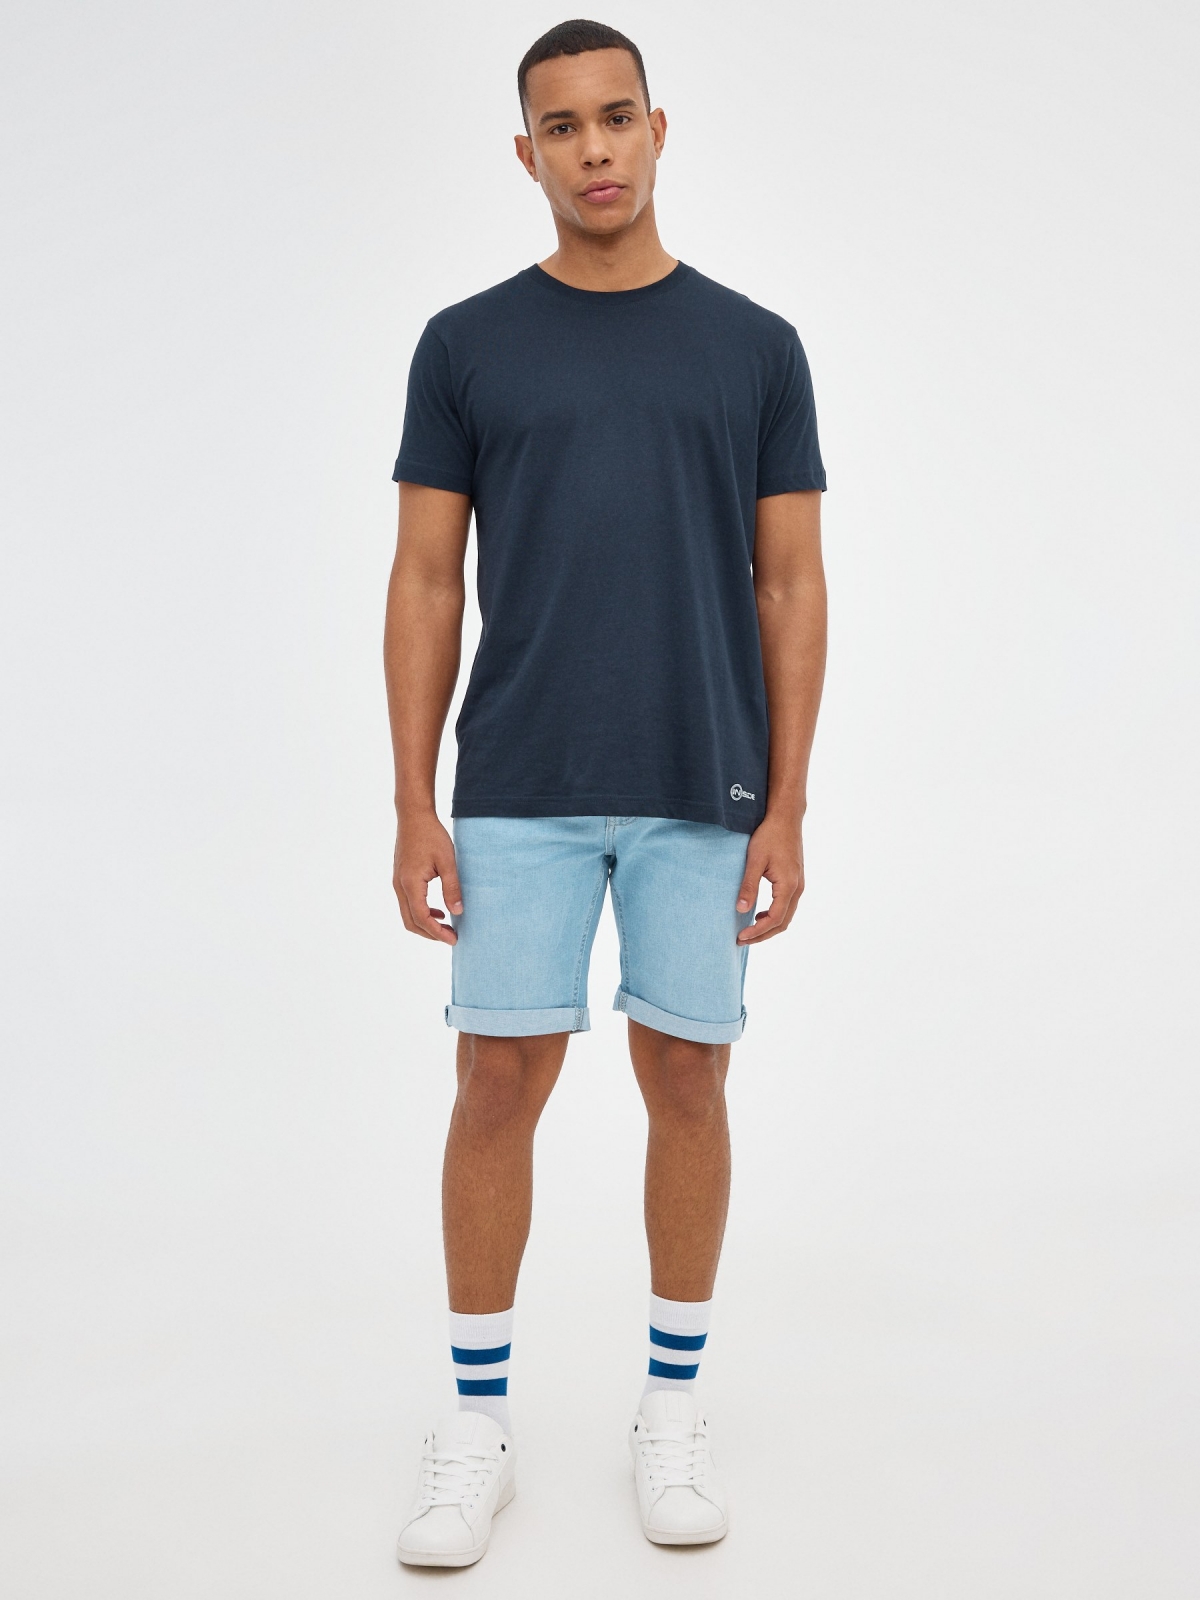 Denim Skinny Bermuda Shorts blue front view